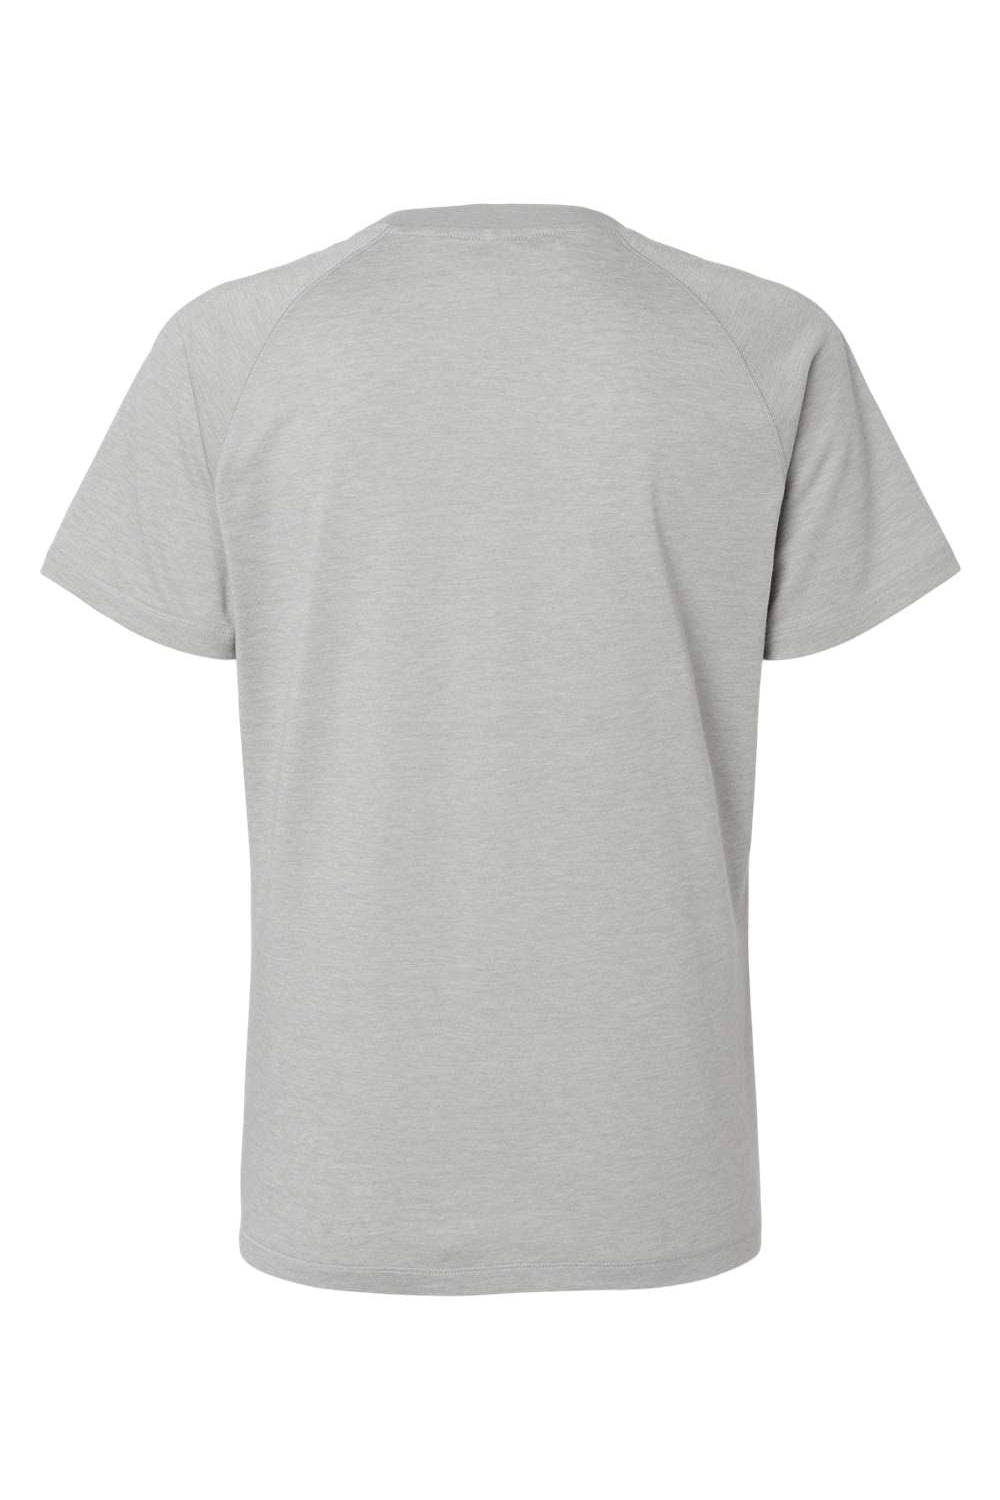 Adidas A557 Womens Short Sleeve Crewneck T-Shirt Heather Medium Grey Flat Back